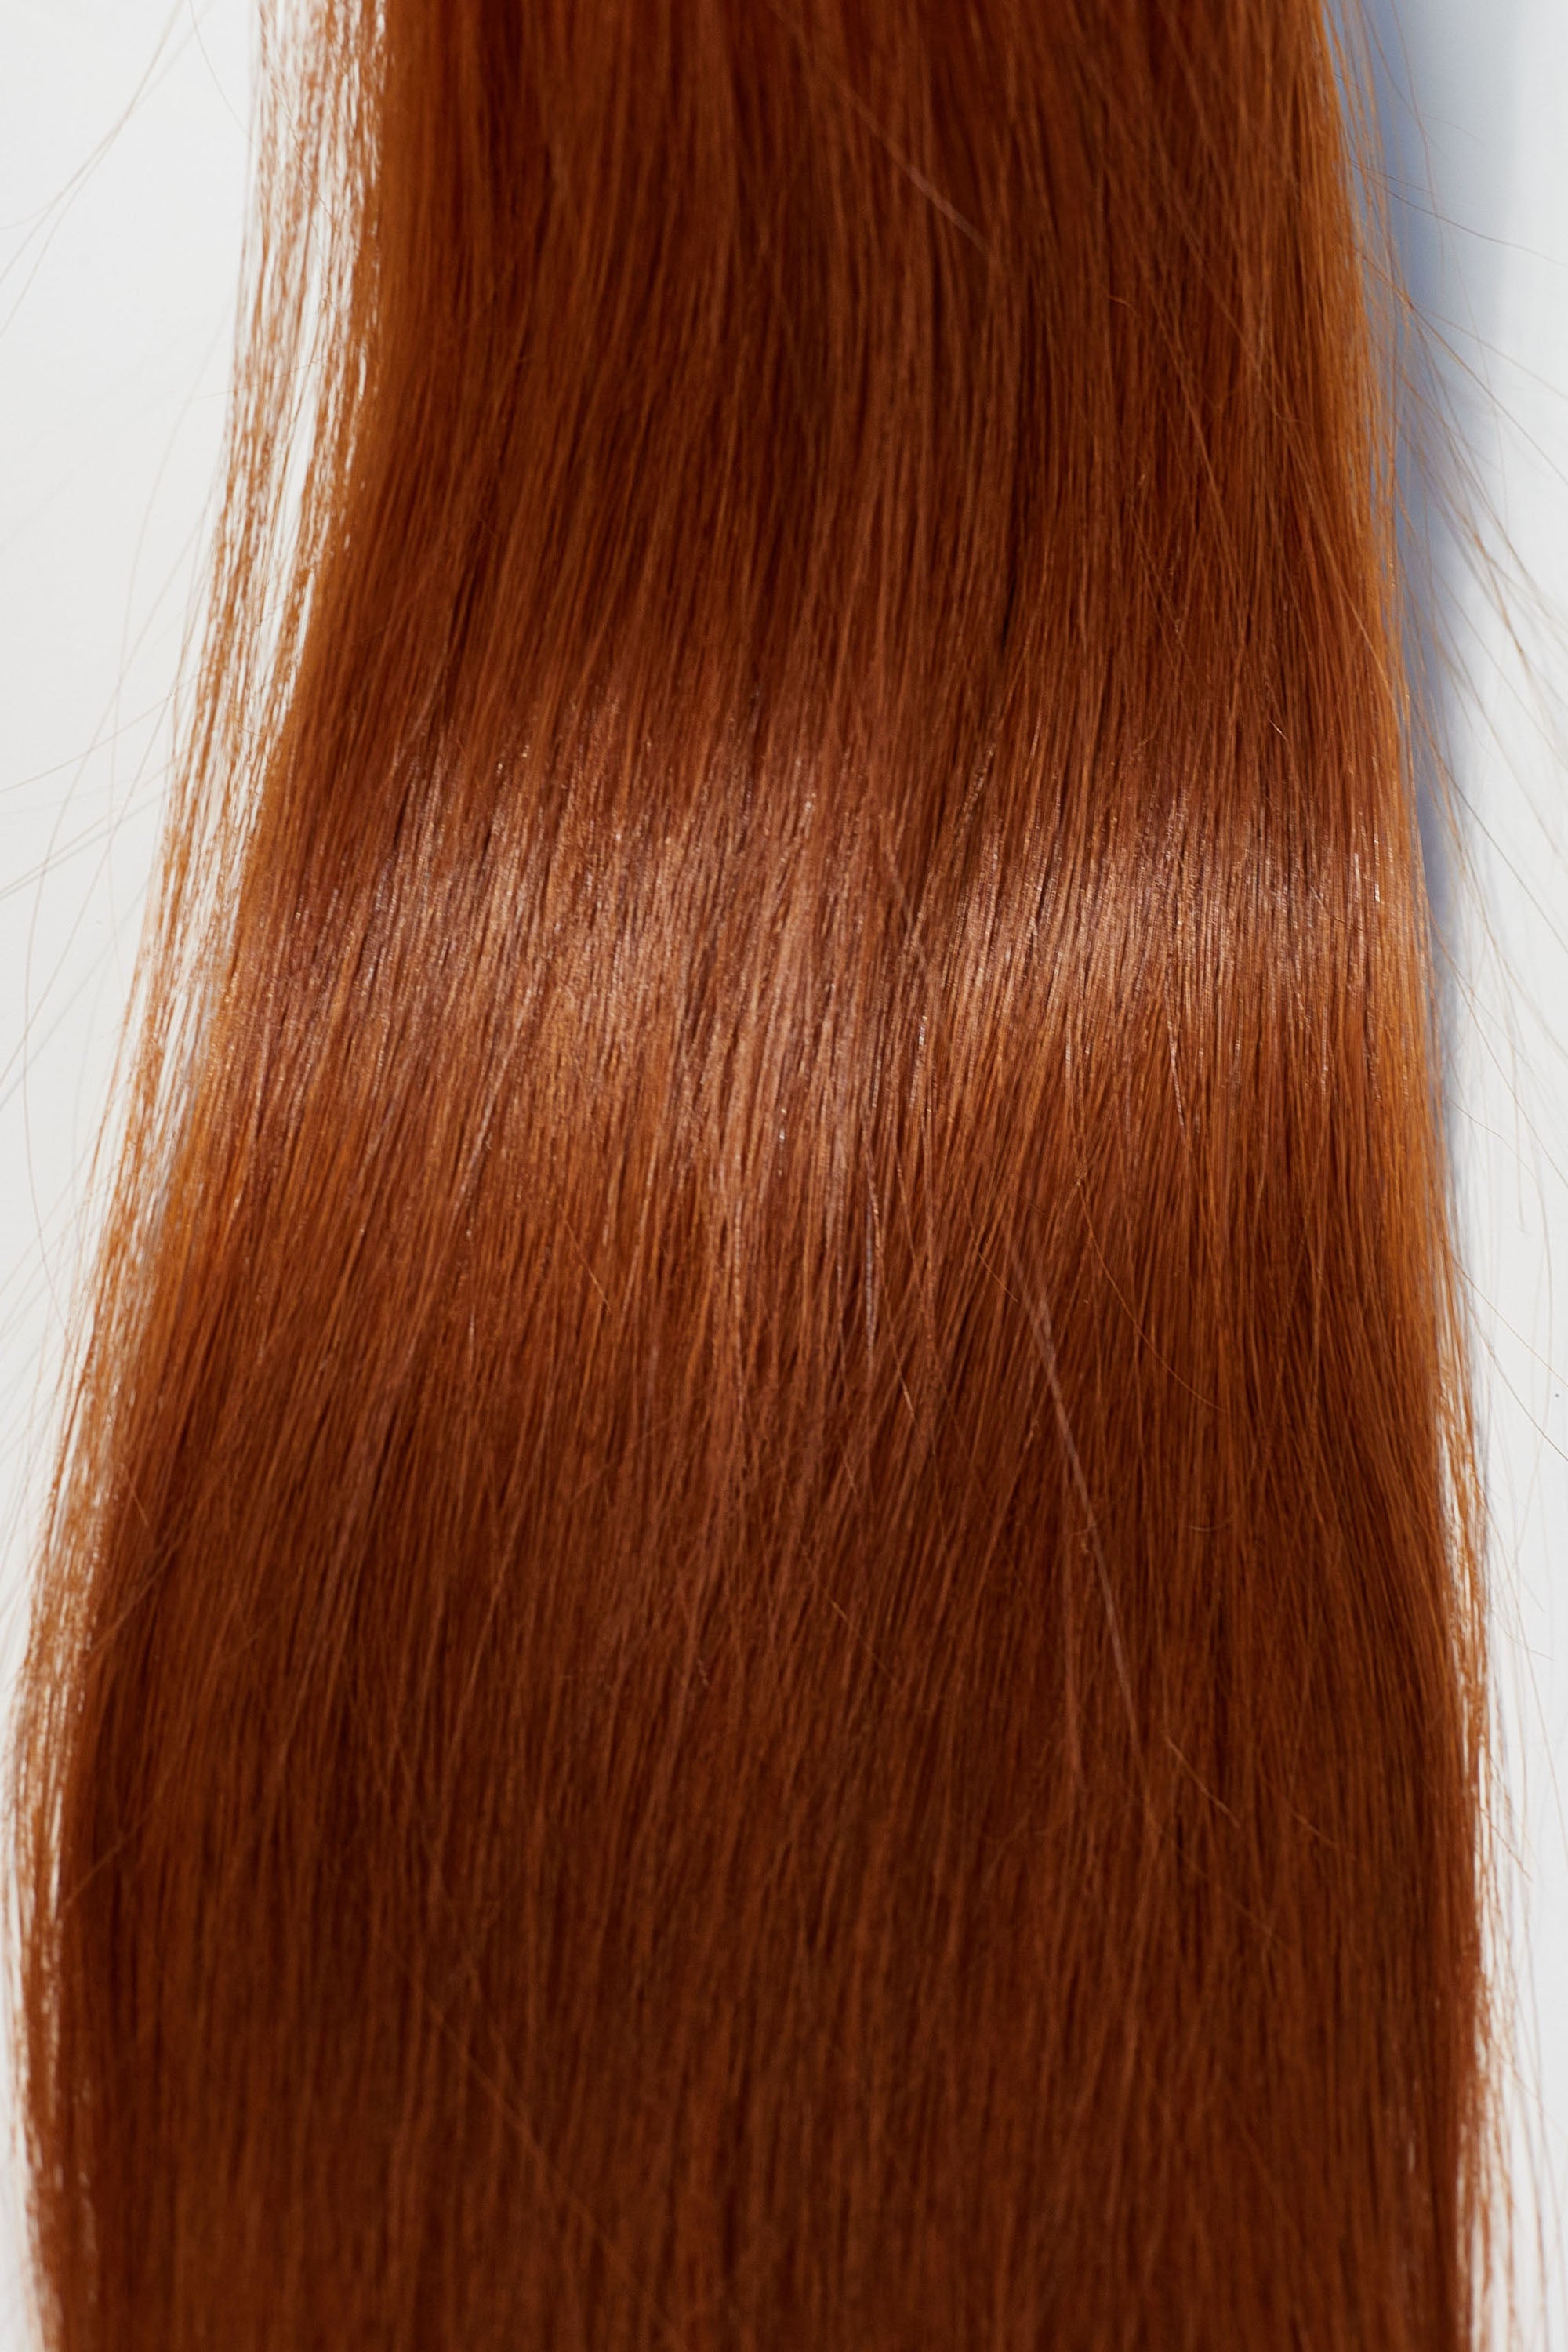 Behair professional Keratin Tip "Premium" 24" (60cm) Natural Straight Brilliant Copper #130 - 25g (1g each pcs) hair extensions